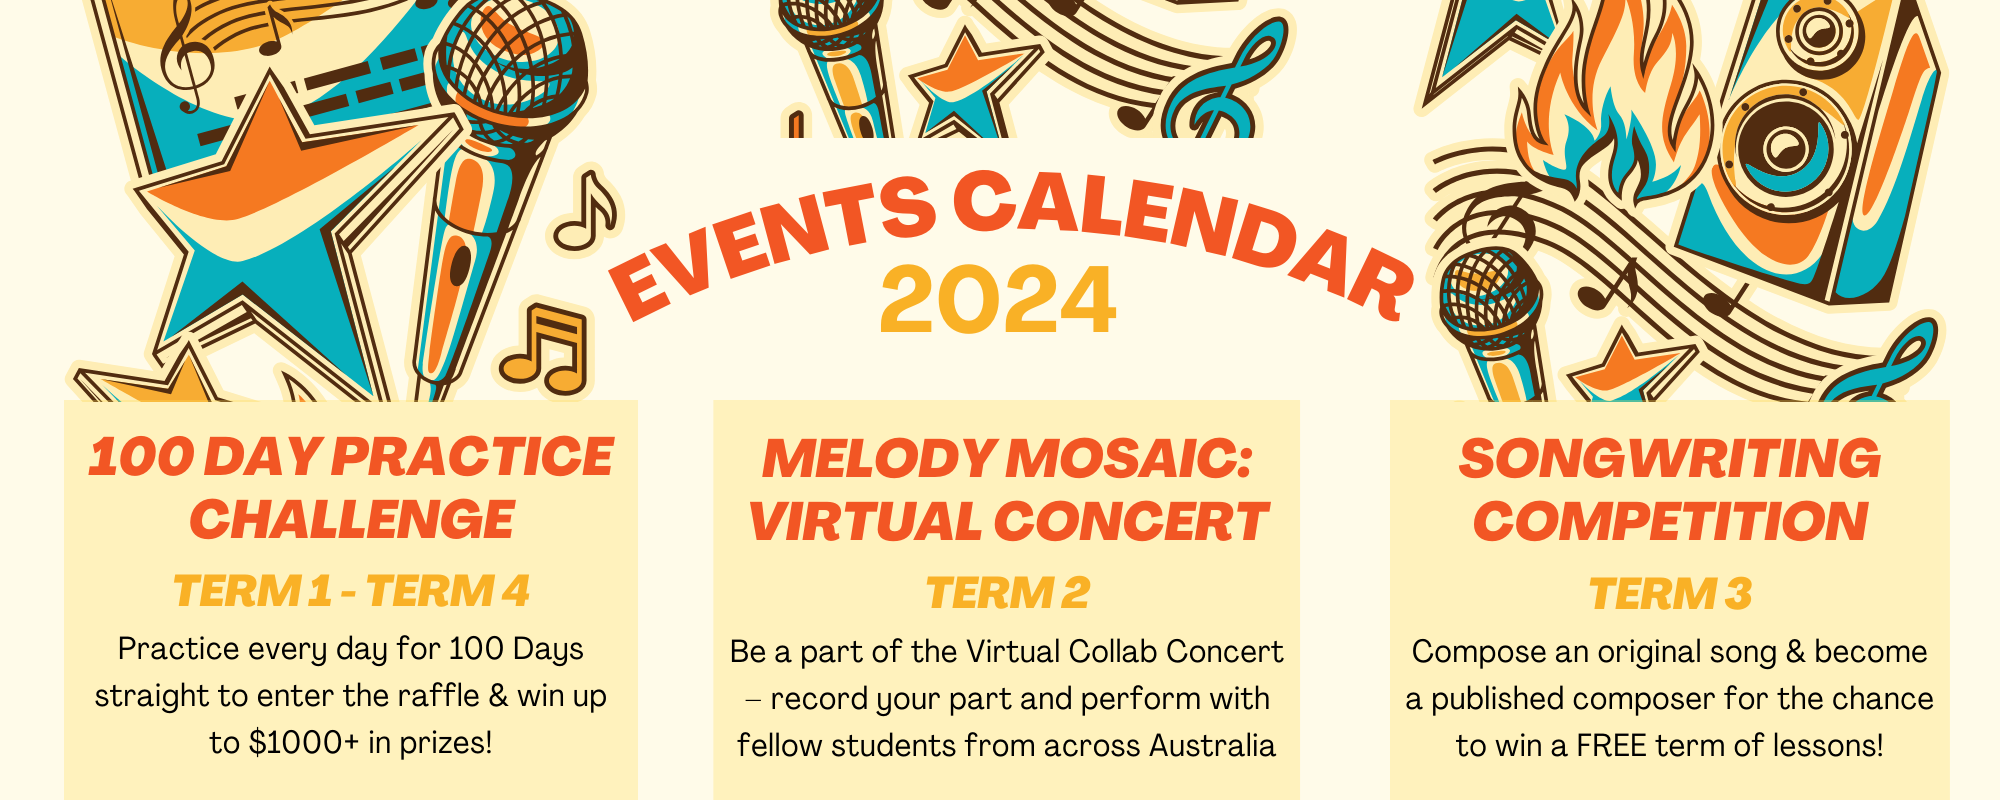 2022 Musical Calendar